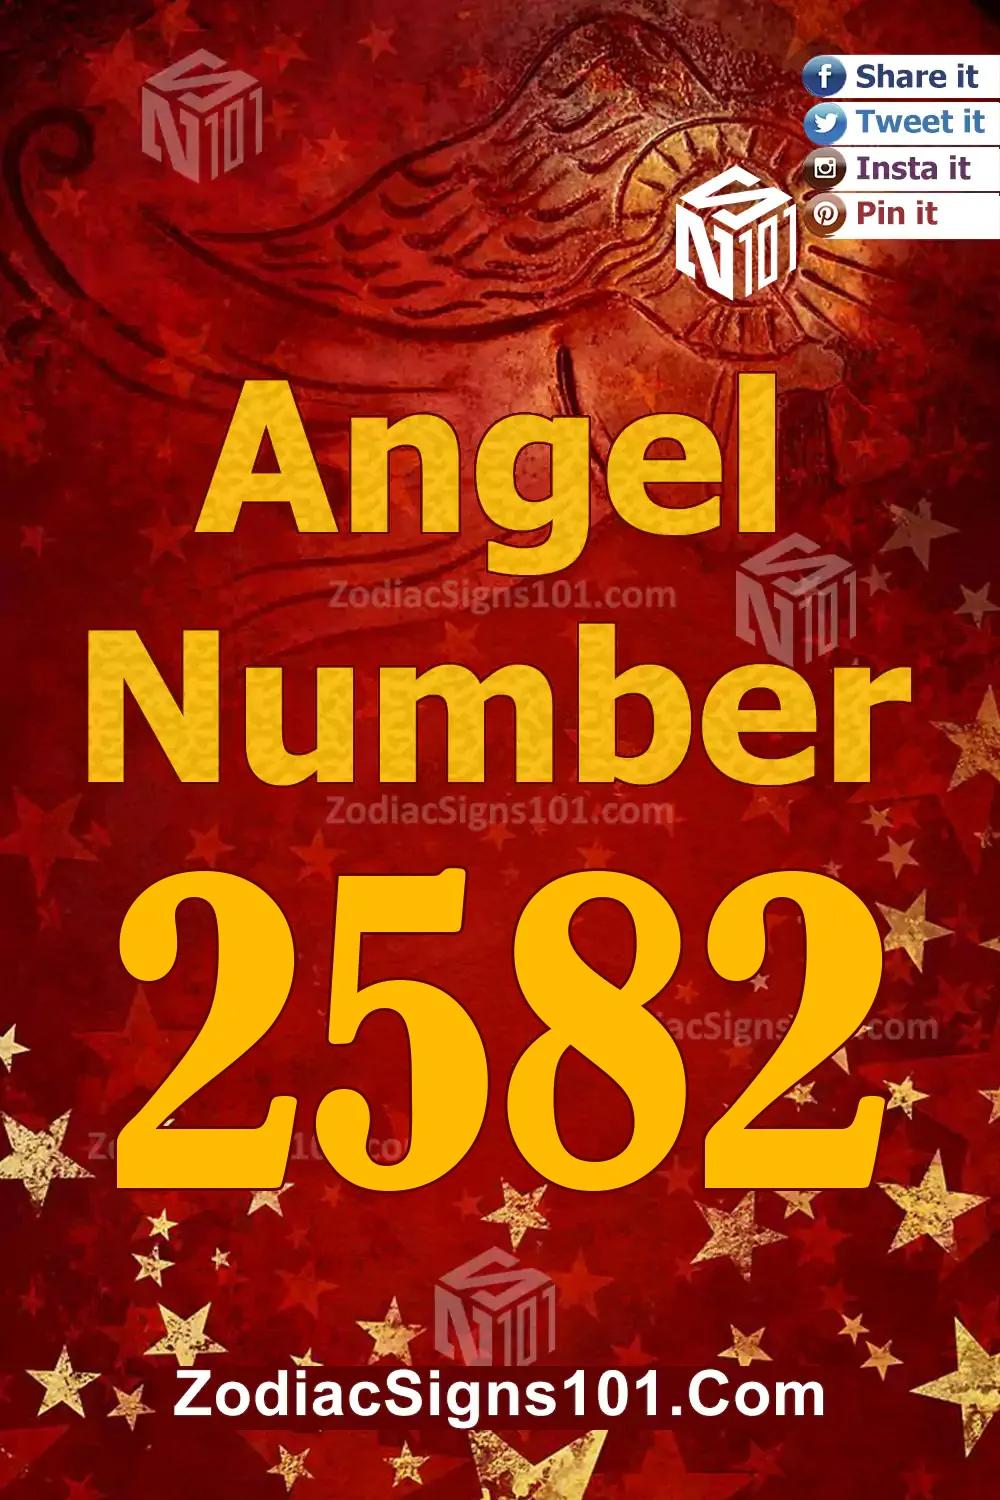 2582-Angel-Number-Meaning.jpg